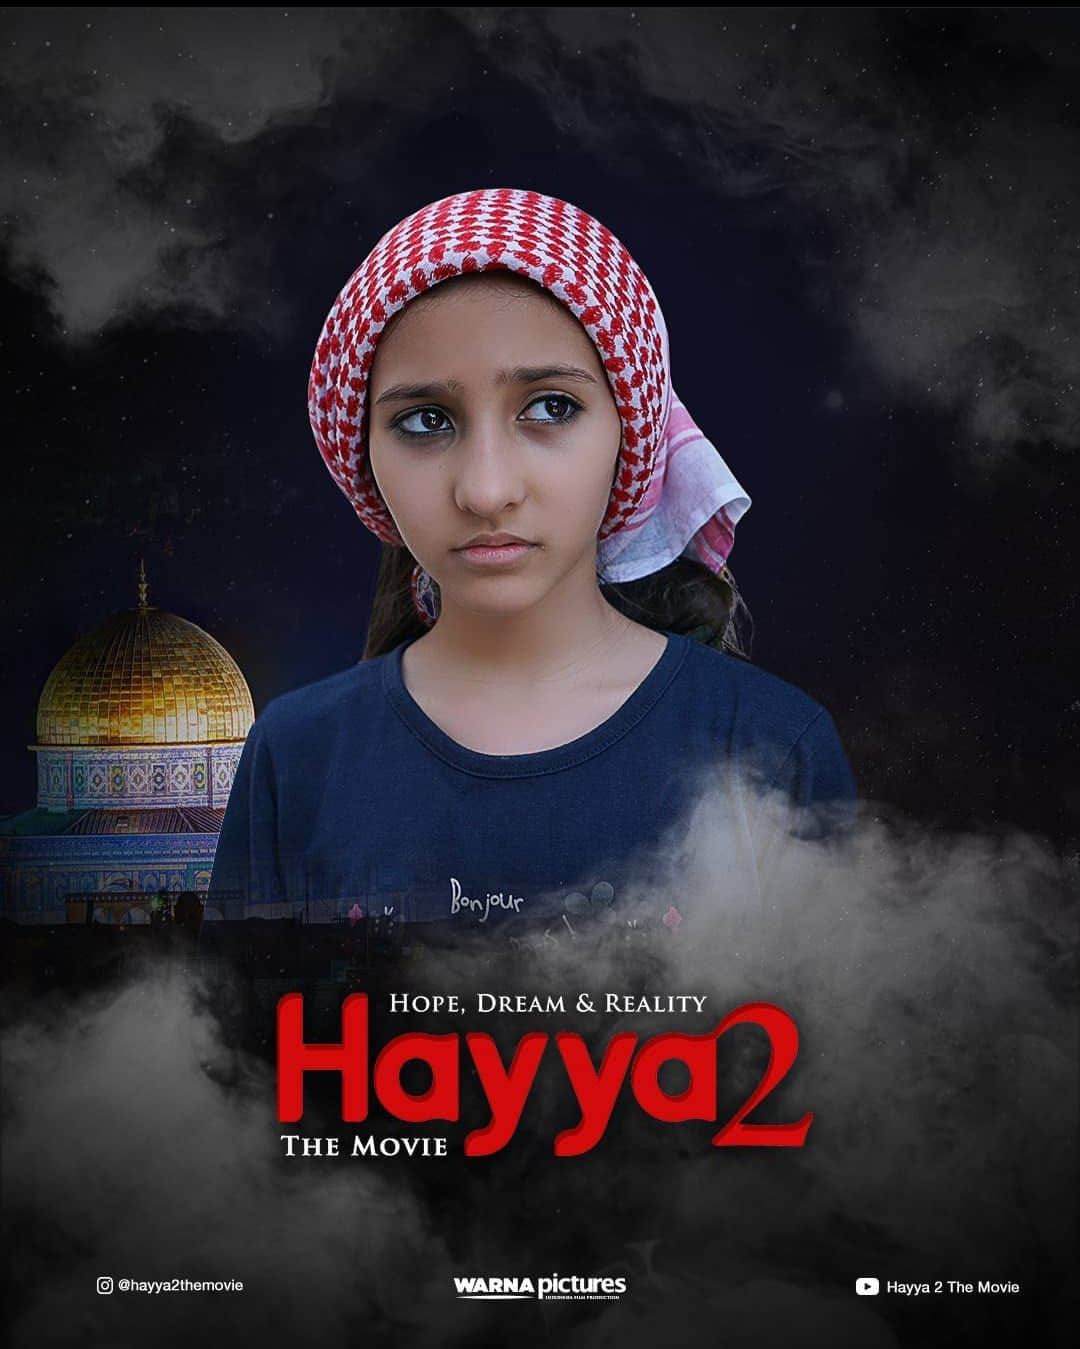 Hayya 2: Hope, Dream & Reality